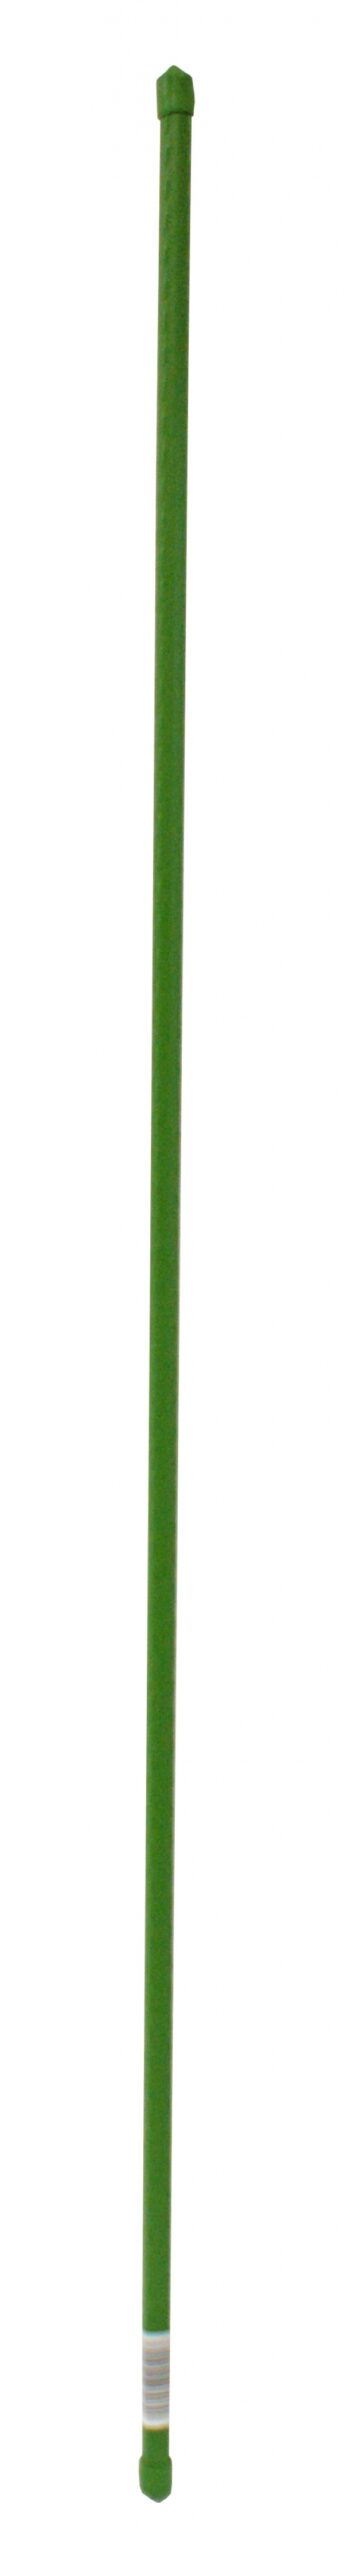 Taimetugi roheline 150cm x 11mm